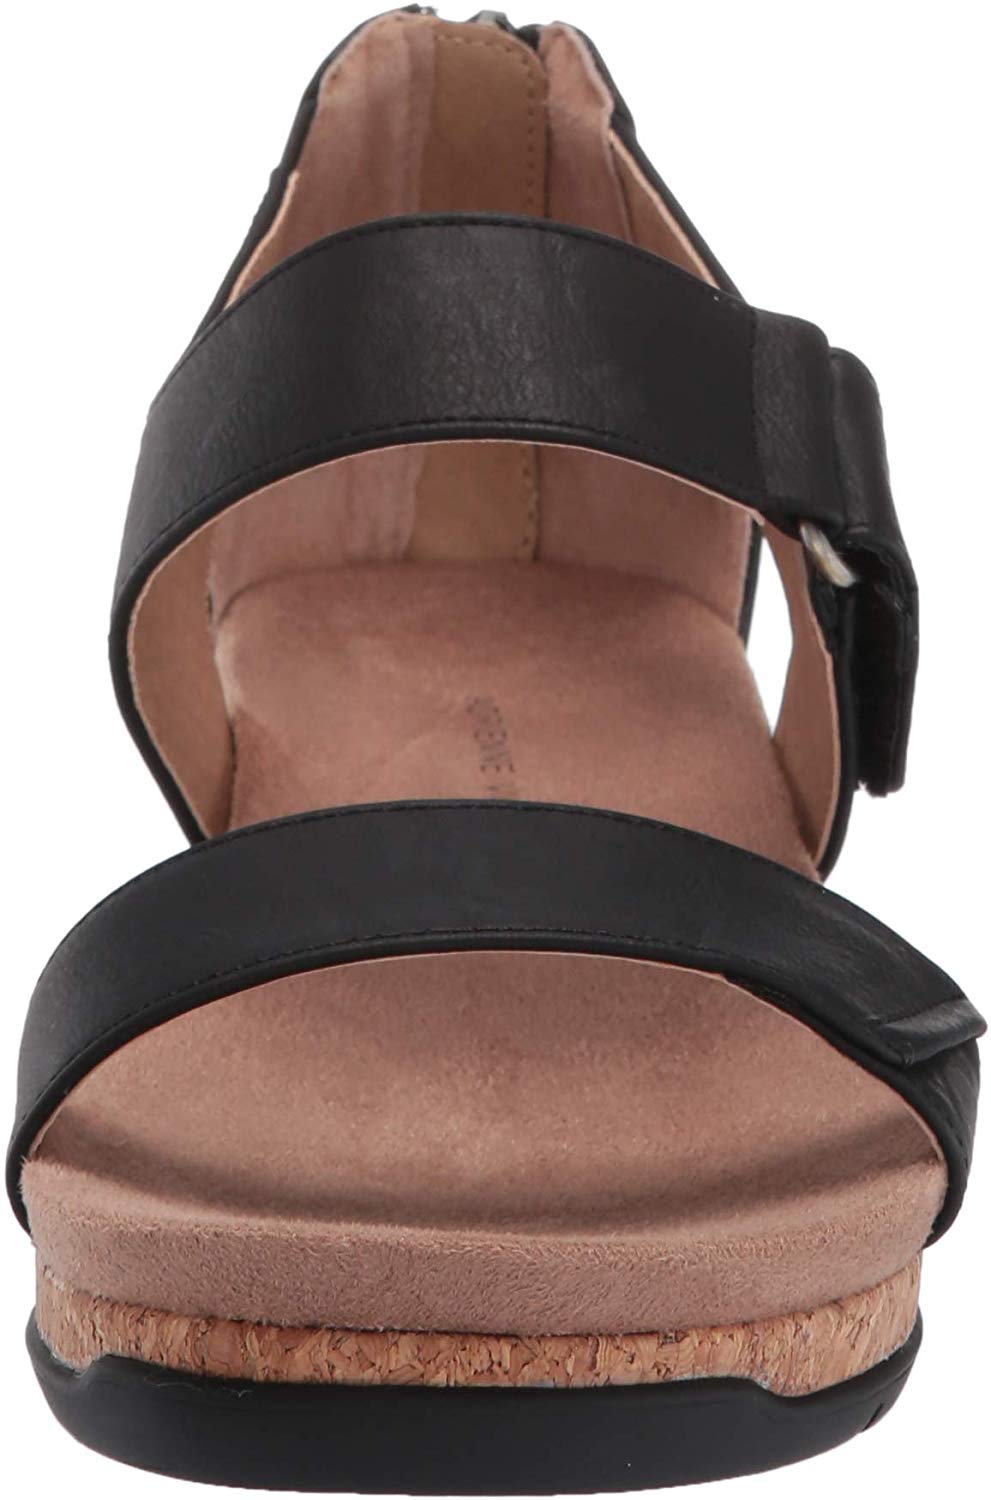 ADRIENNE VITTADINI Women's Taytum Sandal, Black, Size 8.5 | eBay